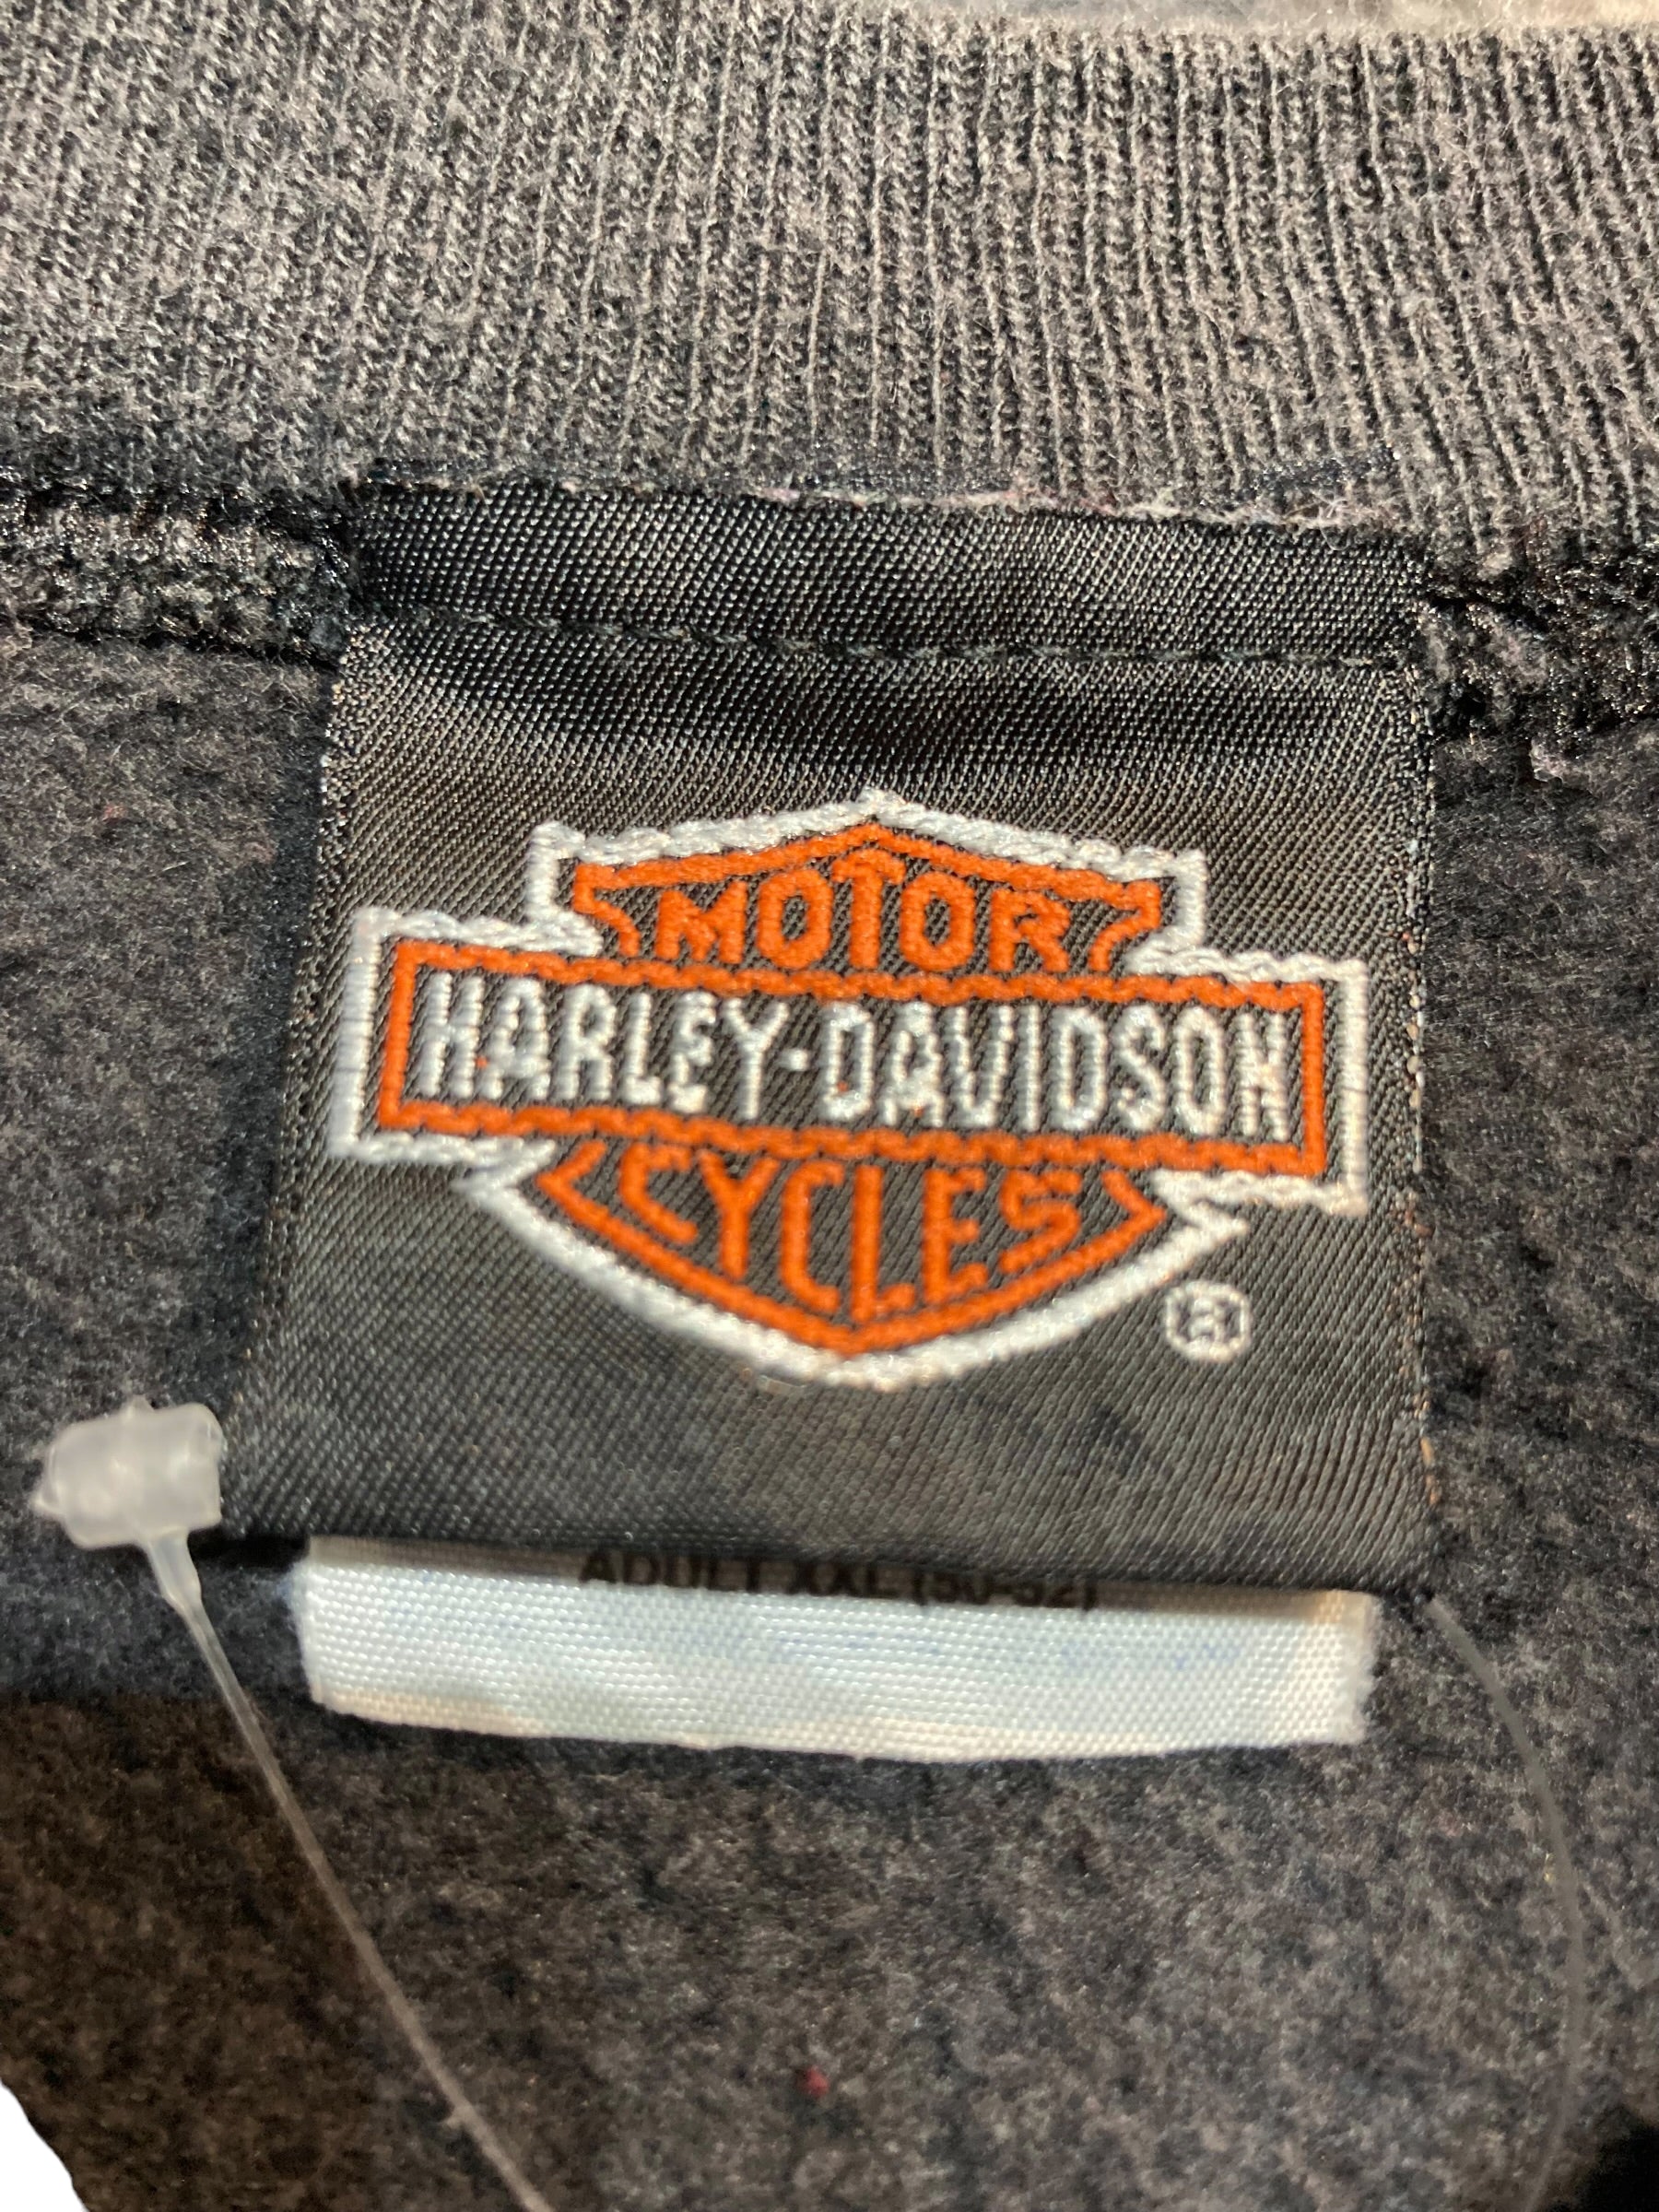 Harley Davidson ハーレーダビッドソン HANES ヘインズ 半袖スウェット トレーナー